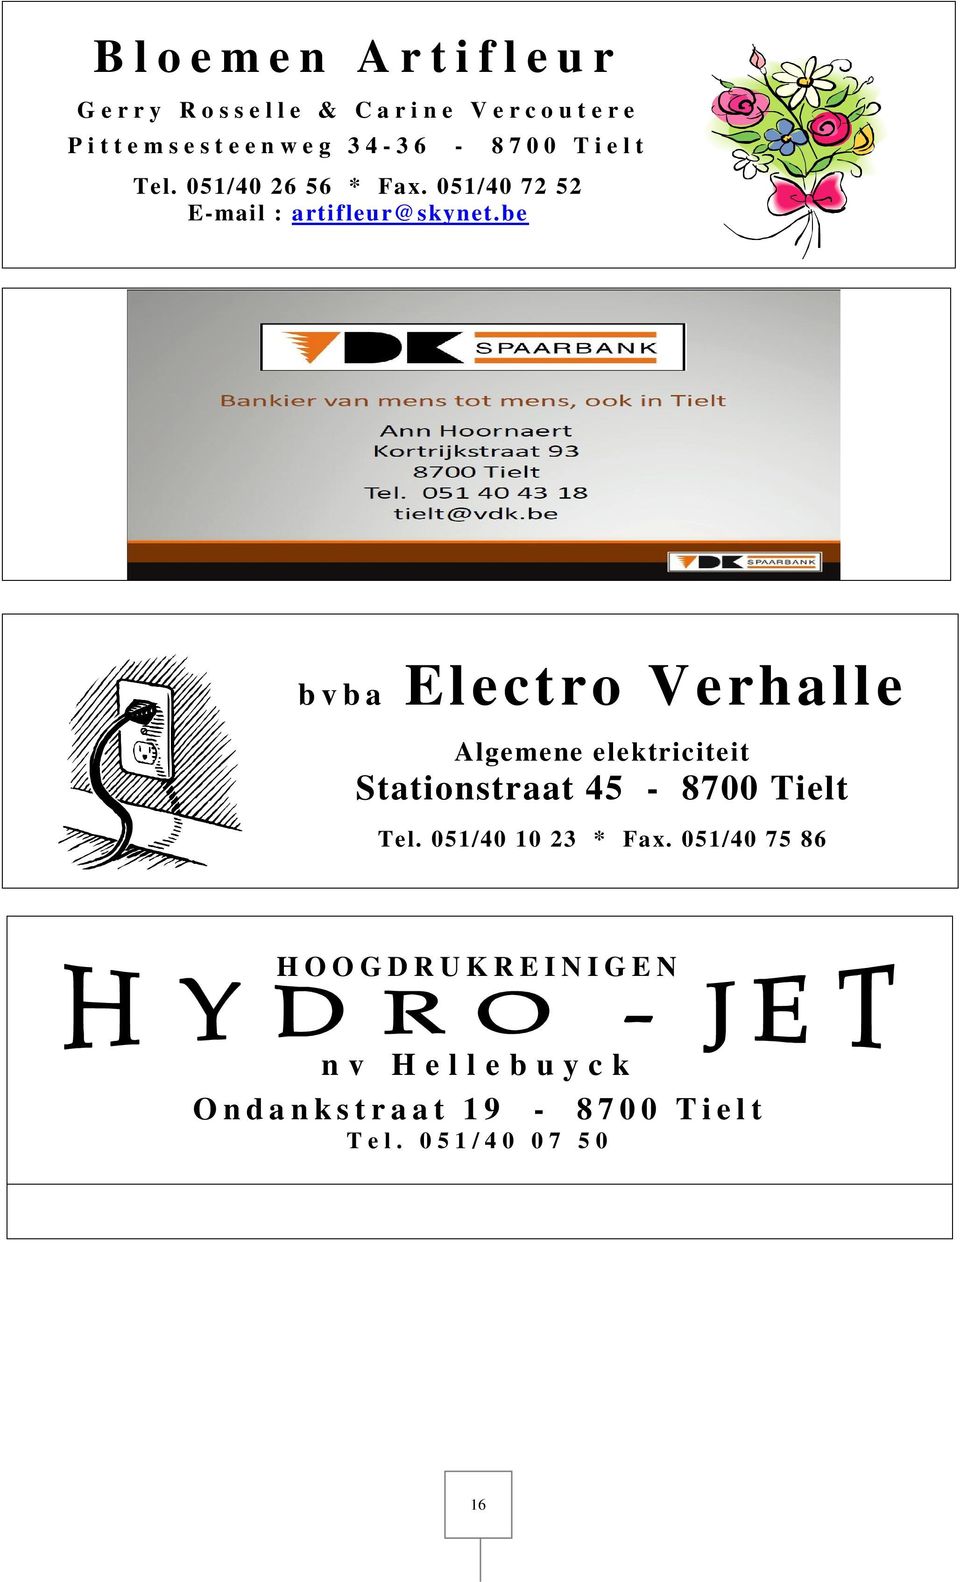 be b v b a Electro Verhalle Algemene elektriciteit Stationstraat 45-8700 Tielt Tel. 051/40 10 23 * Fax.